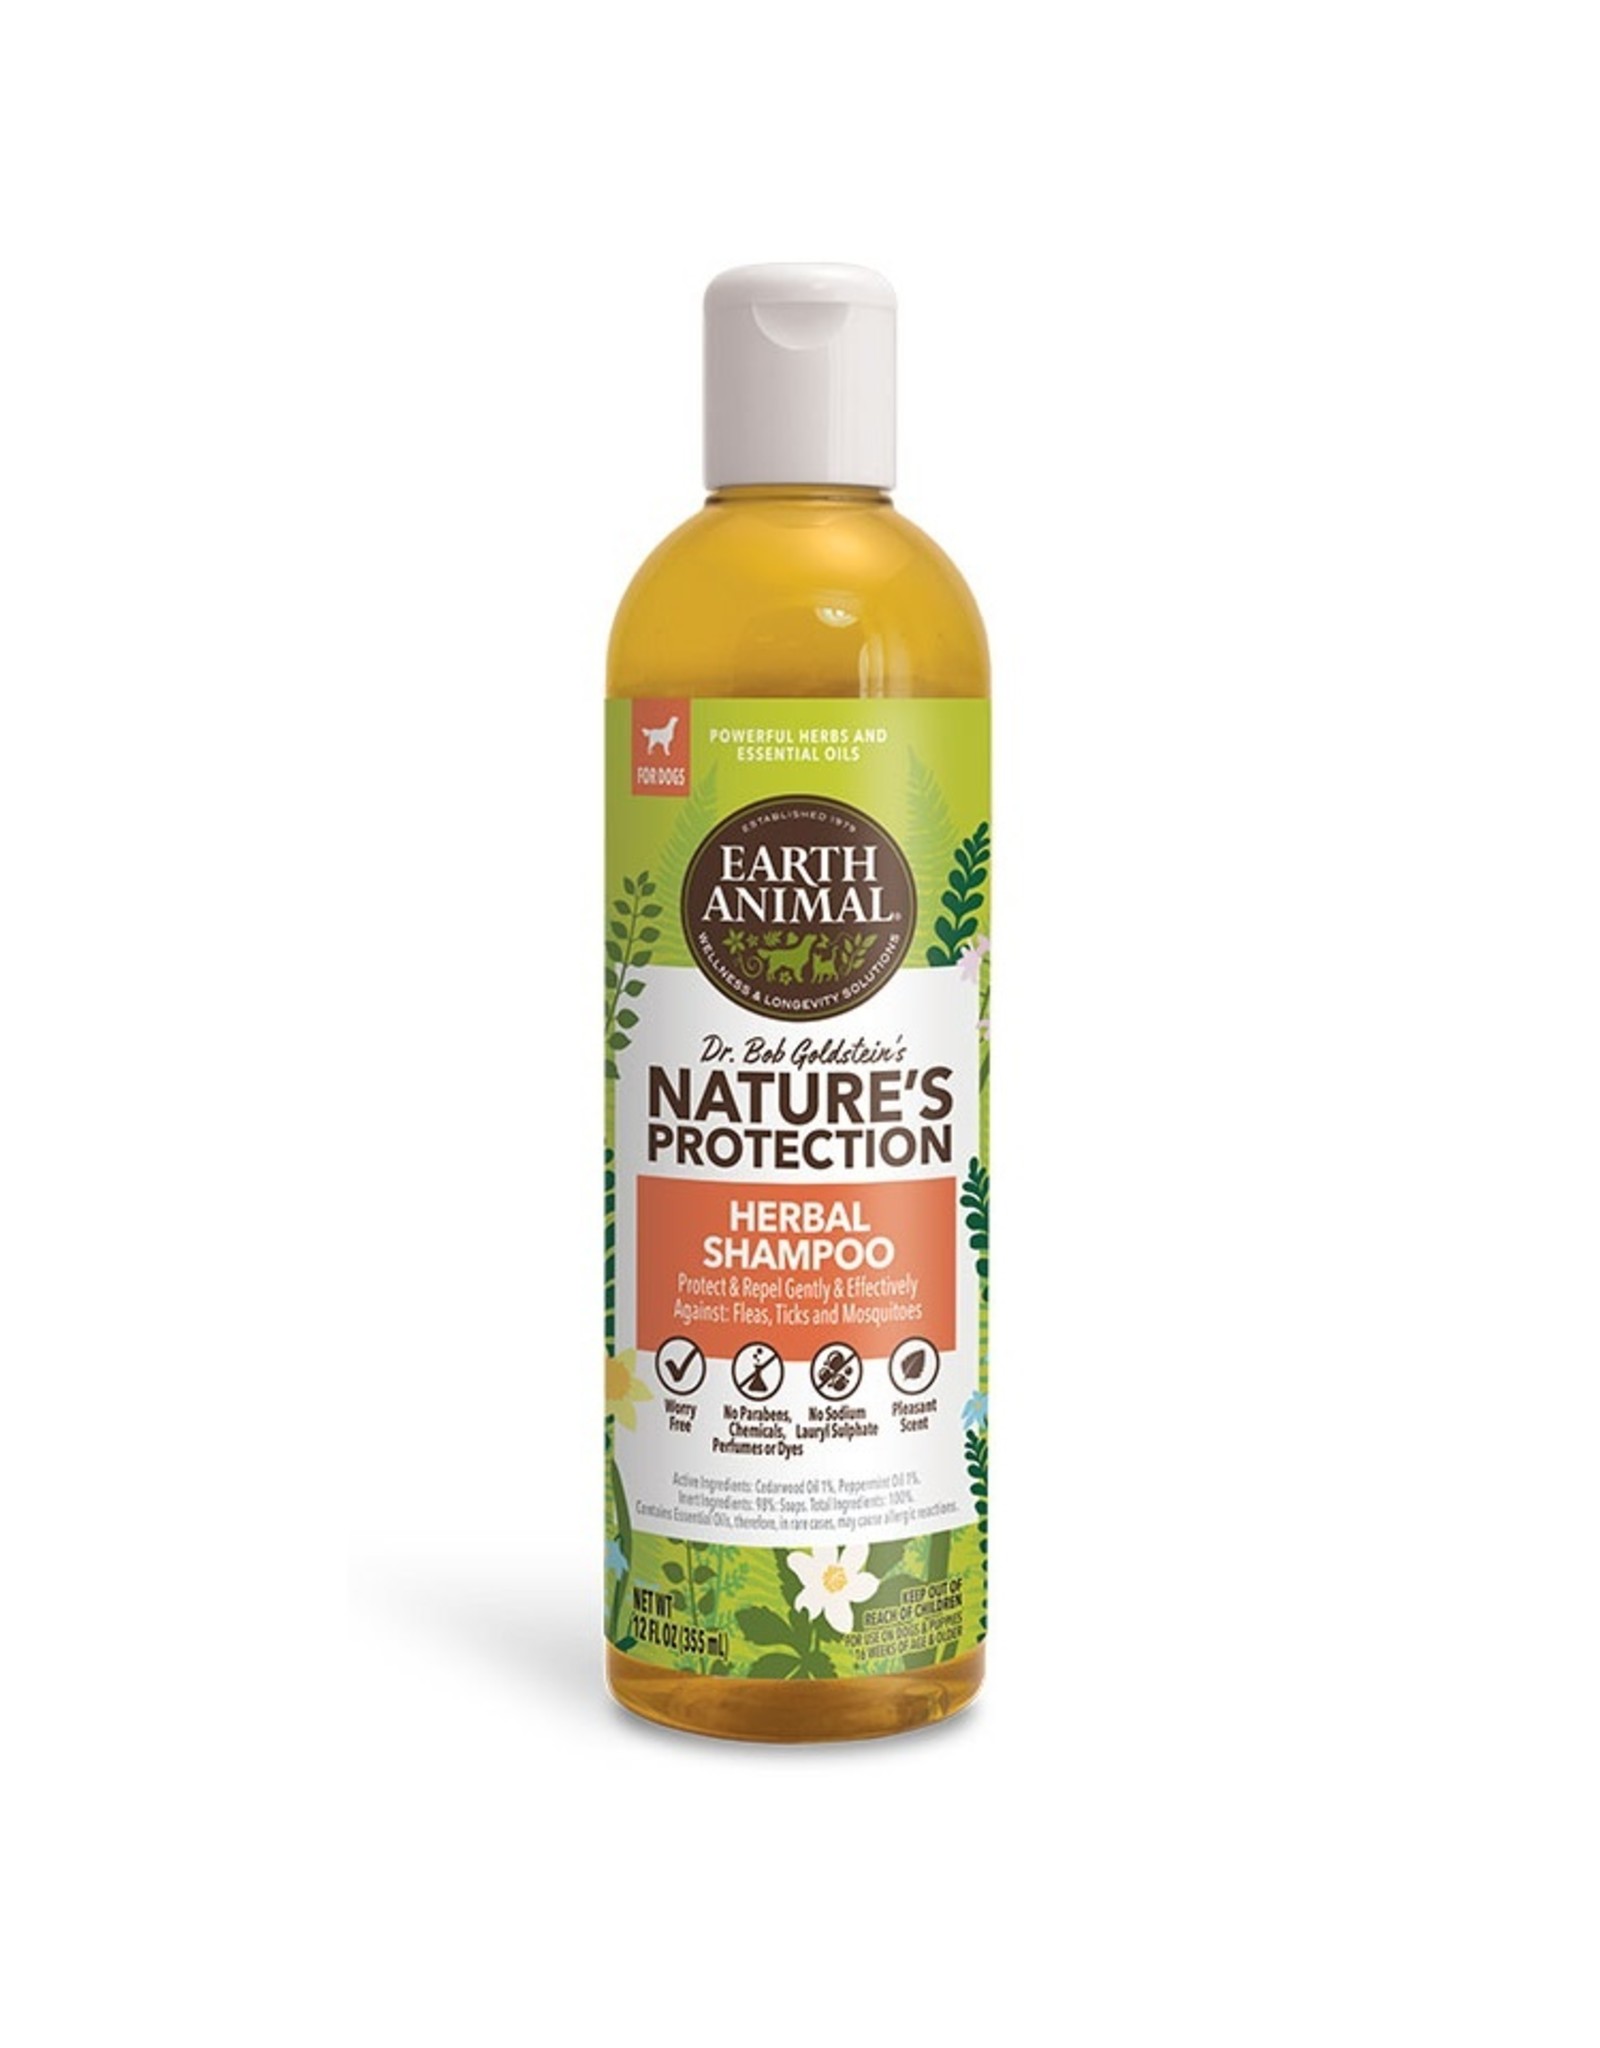 Earth Animal Earth Animal Herbal Shampoo 12oz